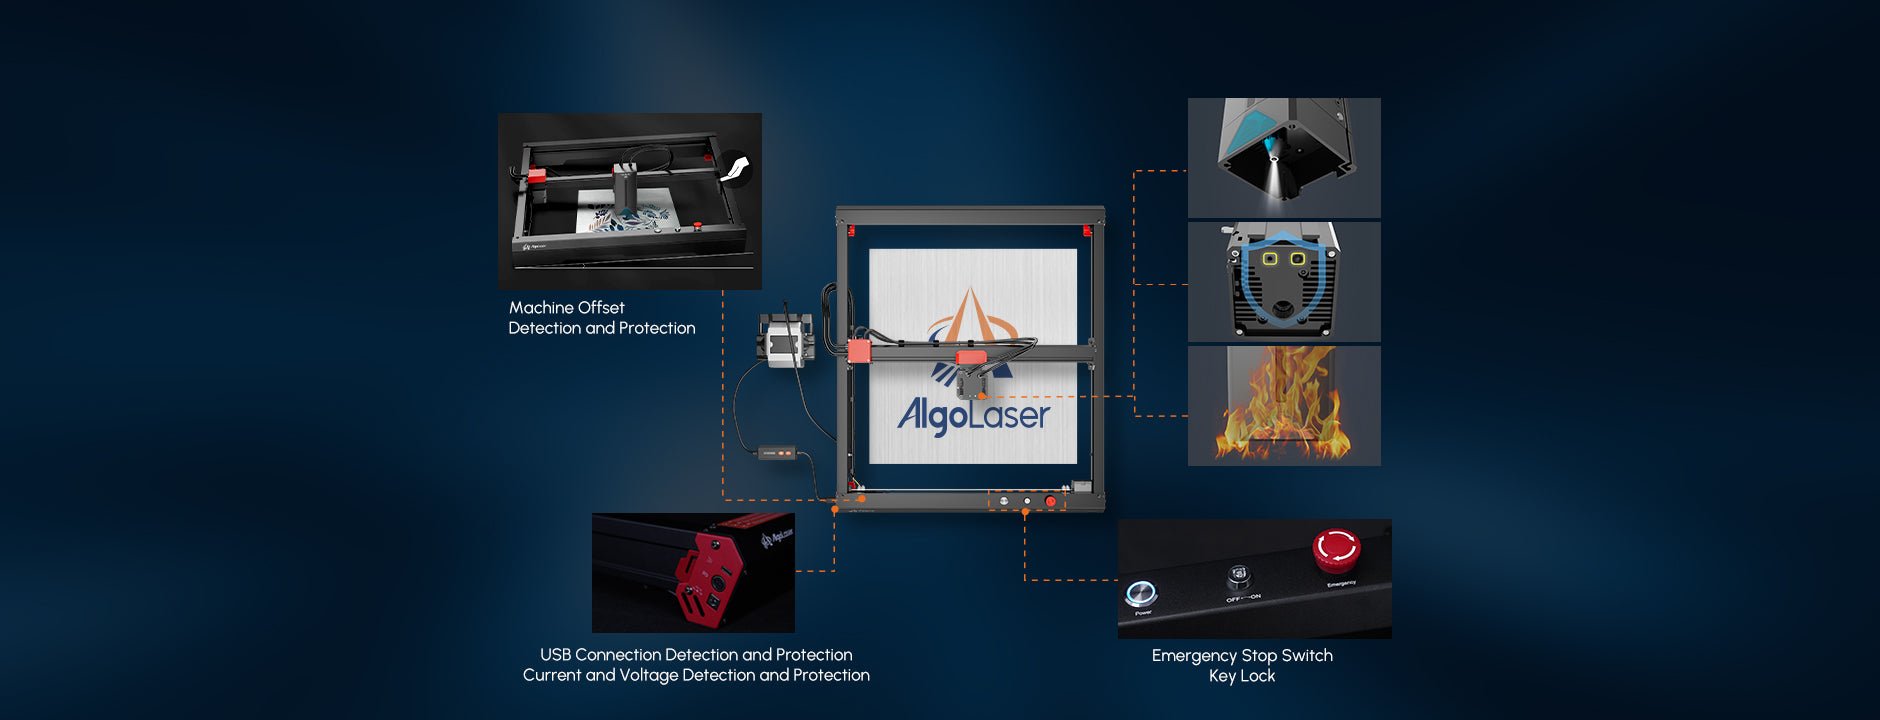 AlgoLaser Aplha 10W Laser Engraver Safety Measures - Stelis3D